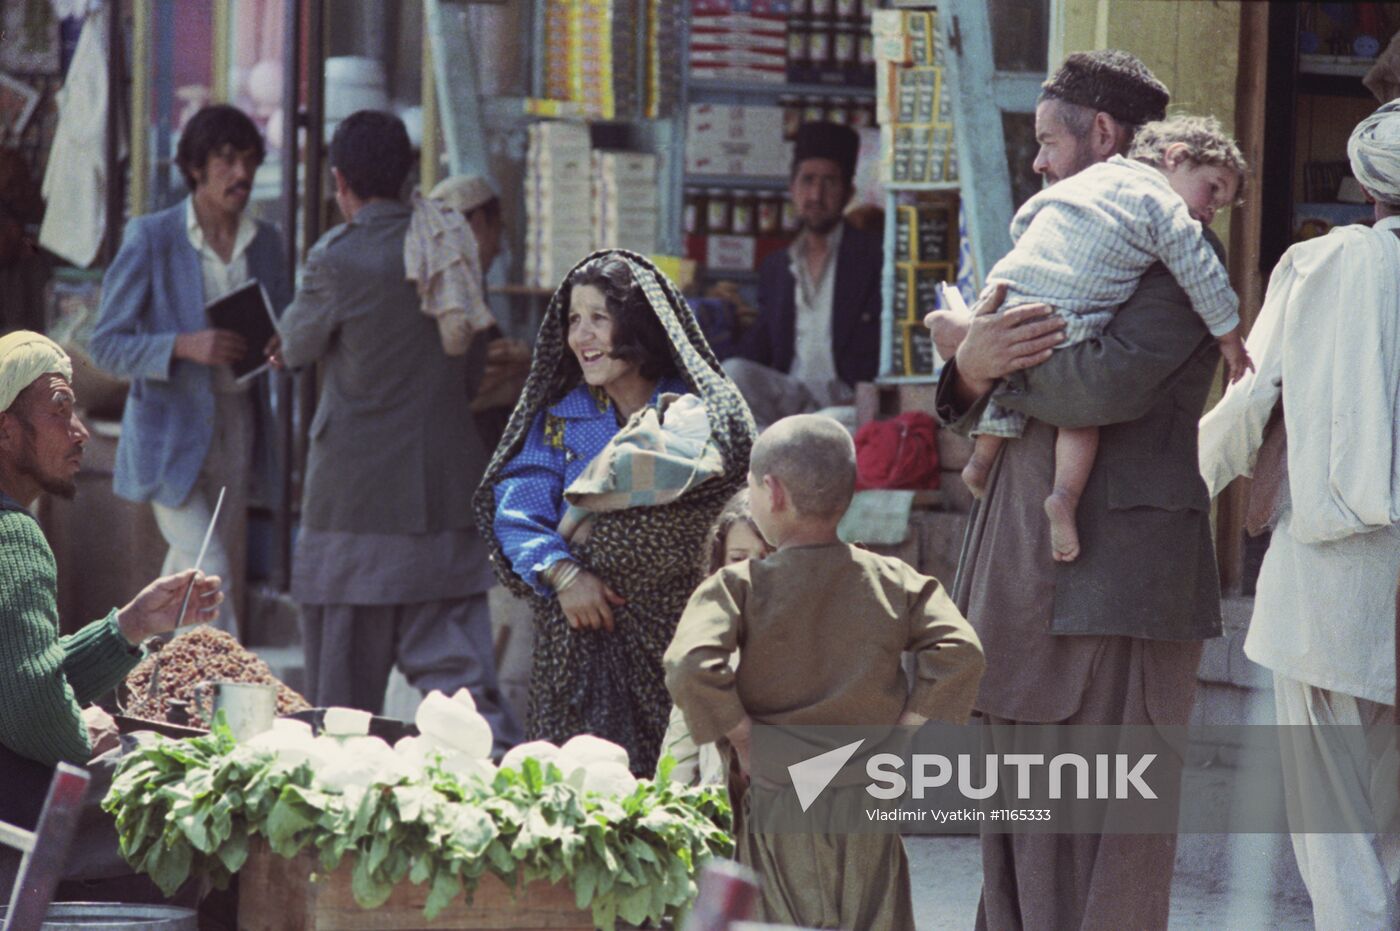 Street-trading in Kabul